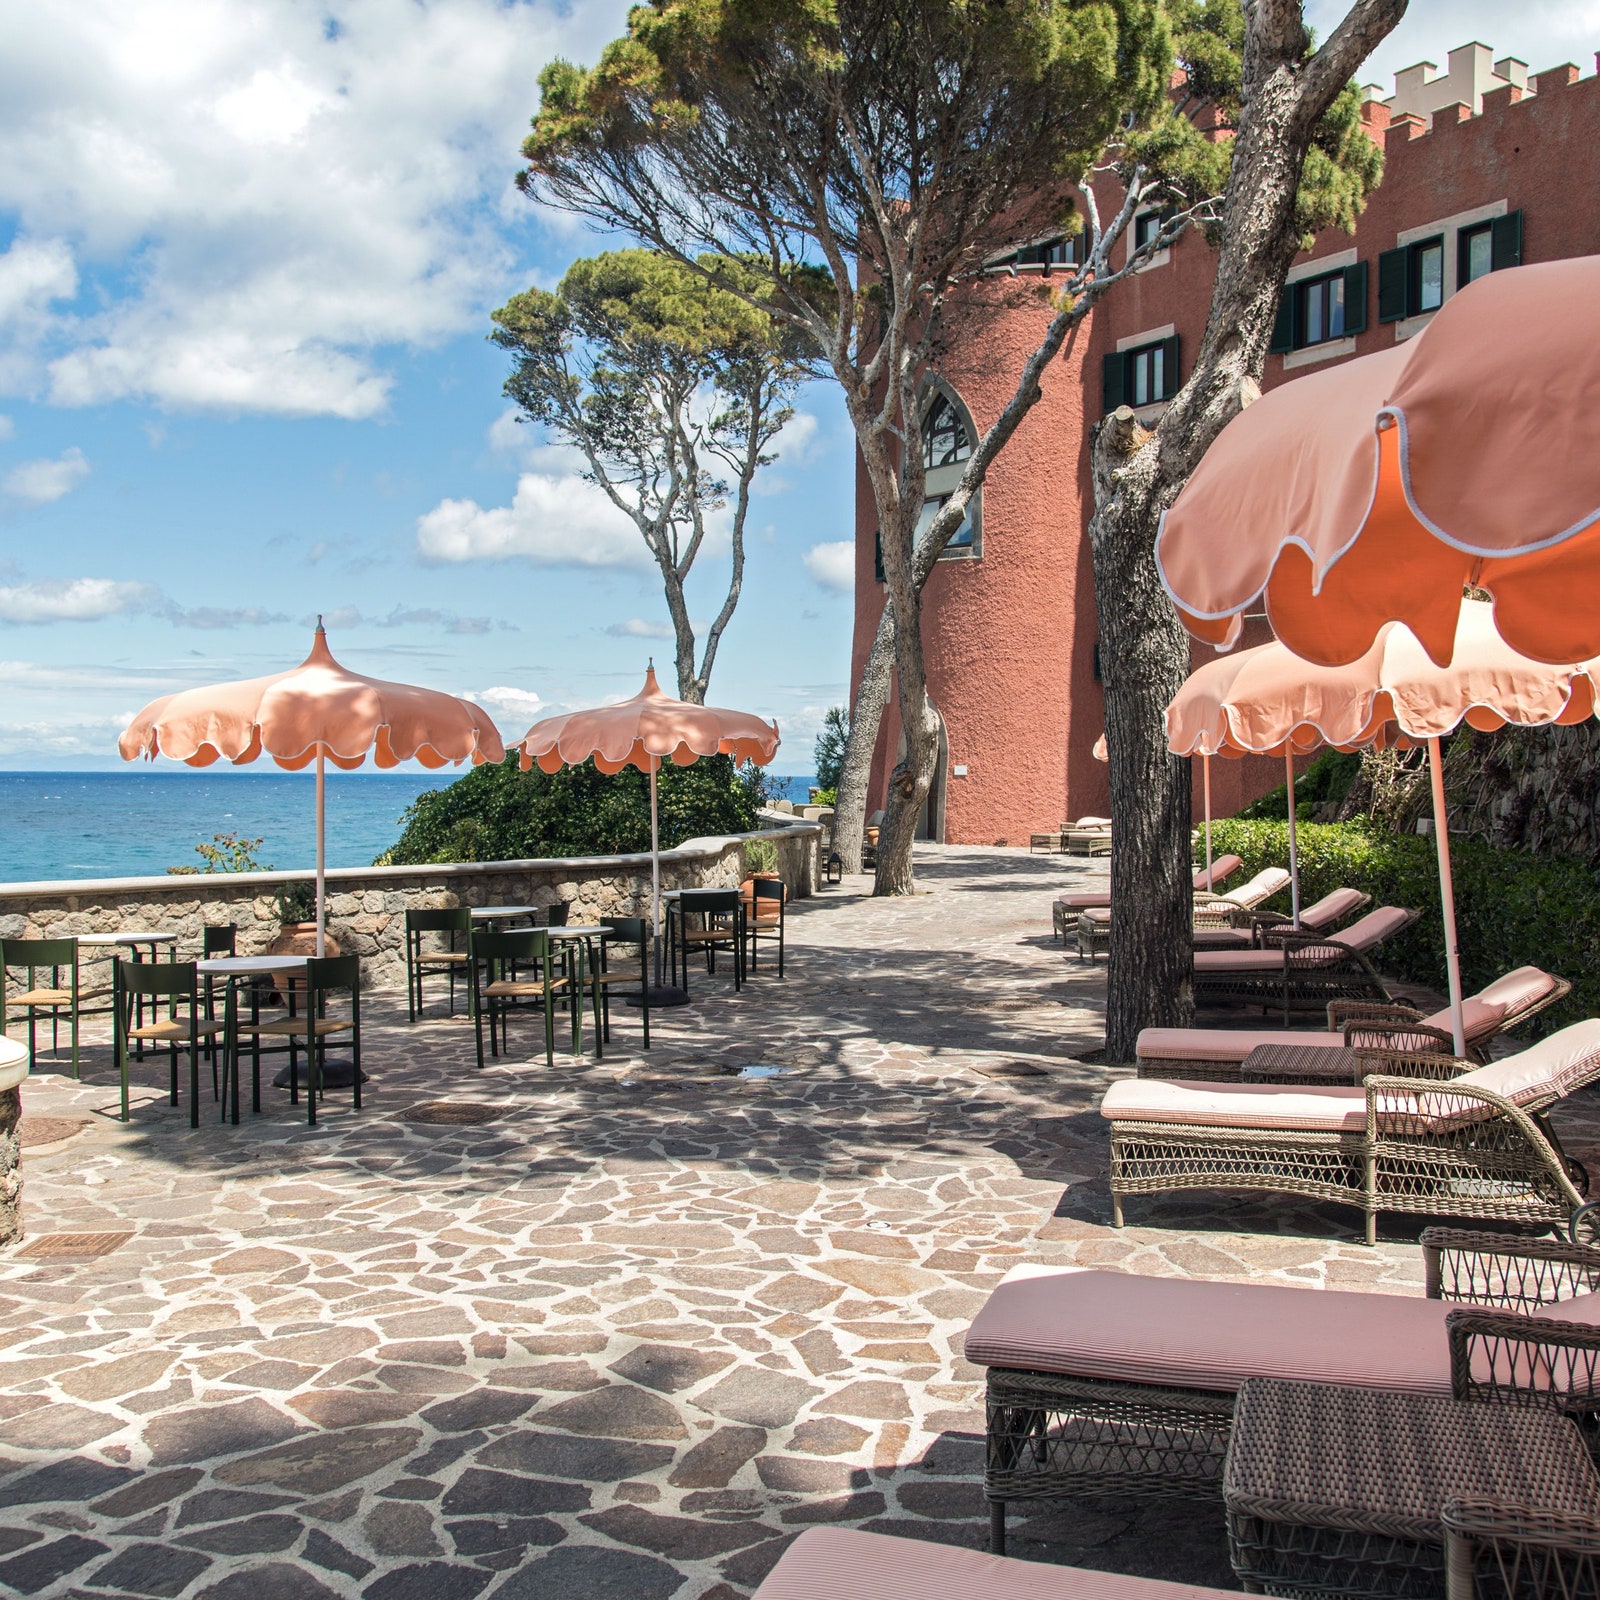 The most stylish hotel on the glamorous Italian island of Ischia